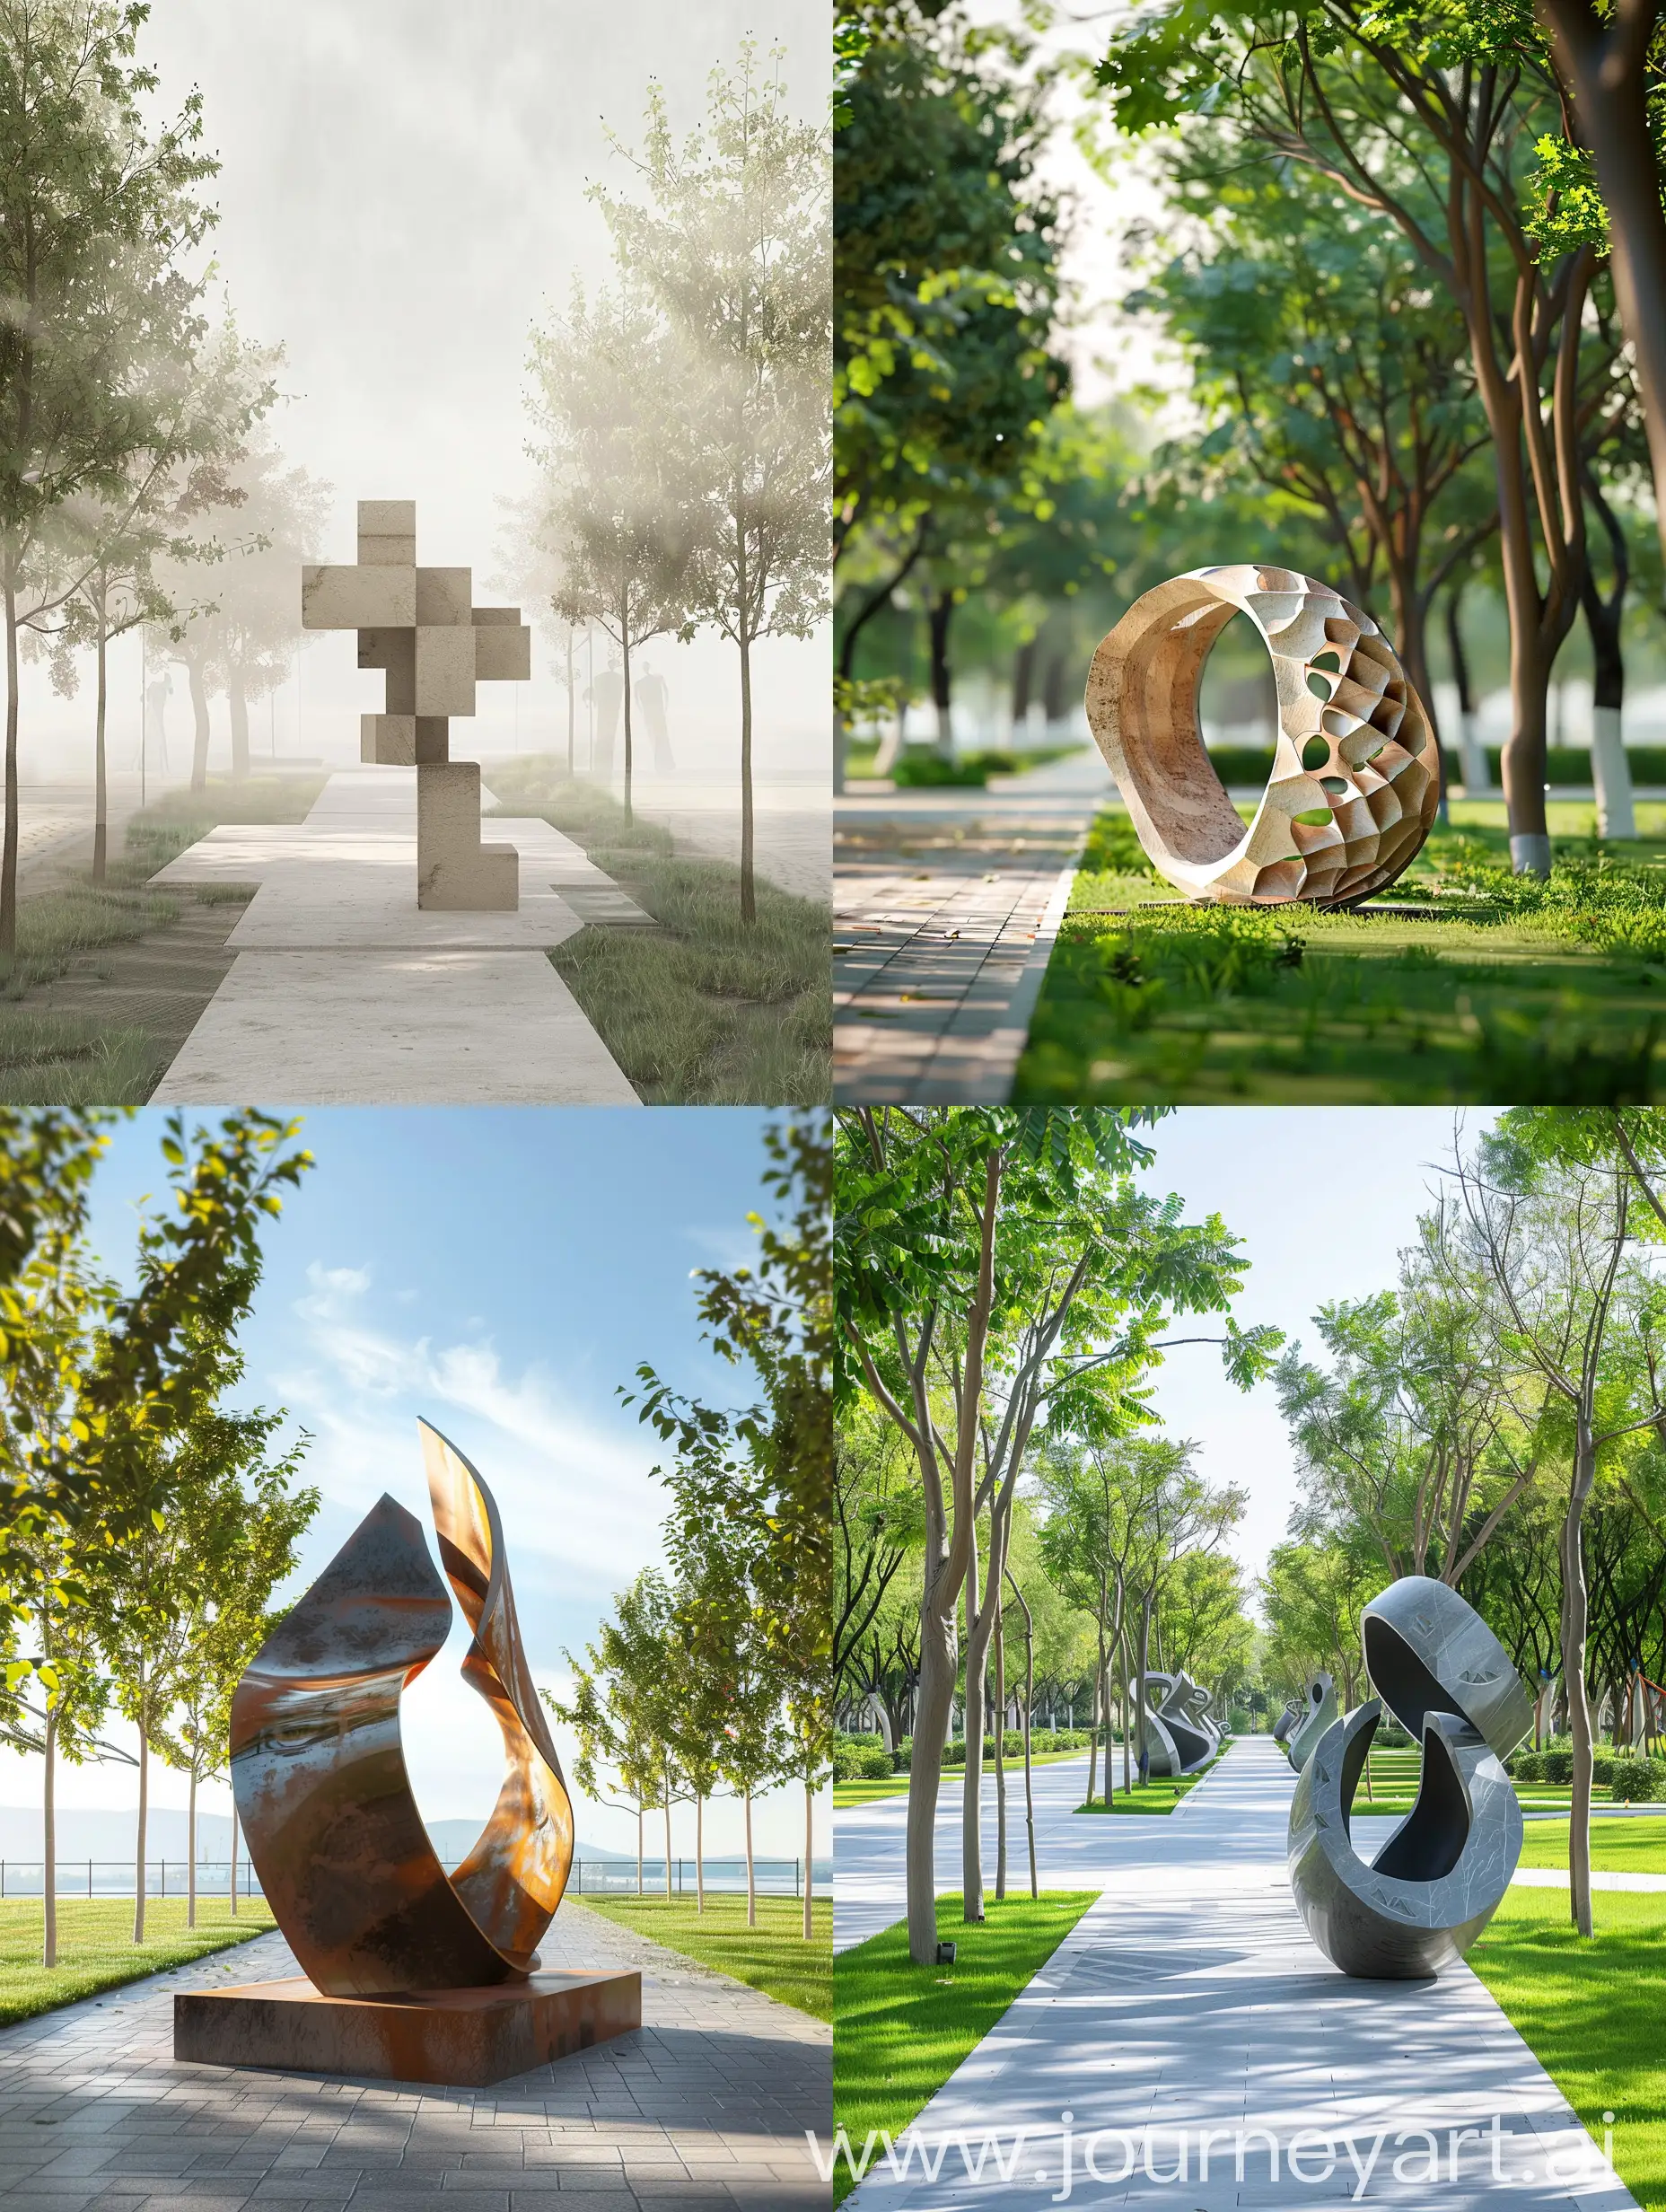 Minimalist-Sculpture-Depicting-Agriculture-in-Green-Promenade